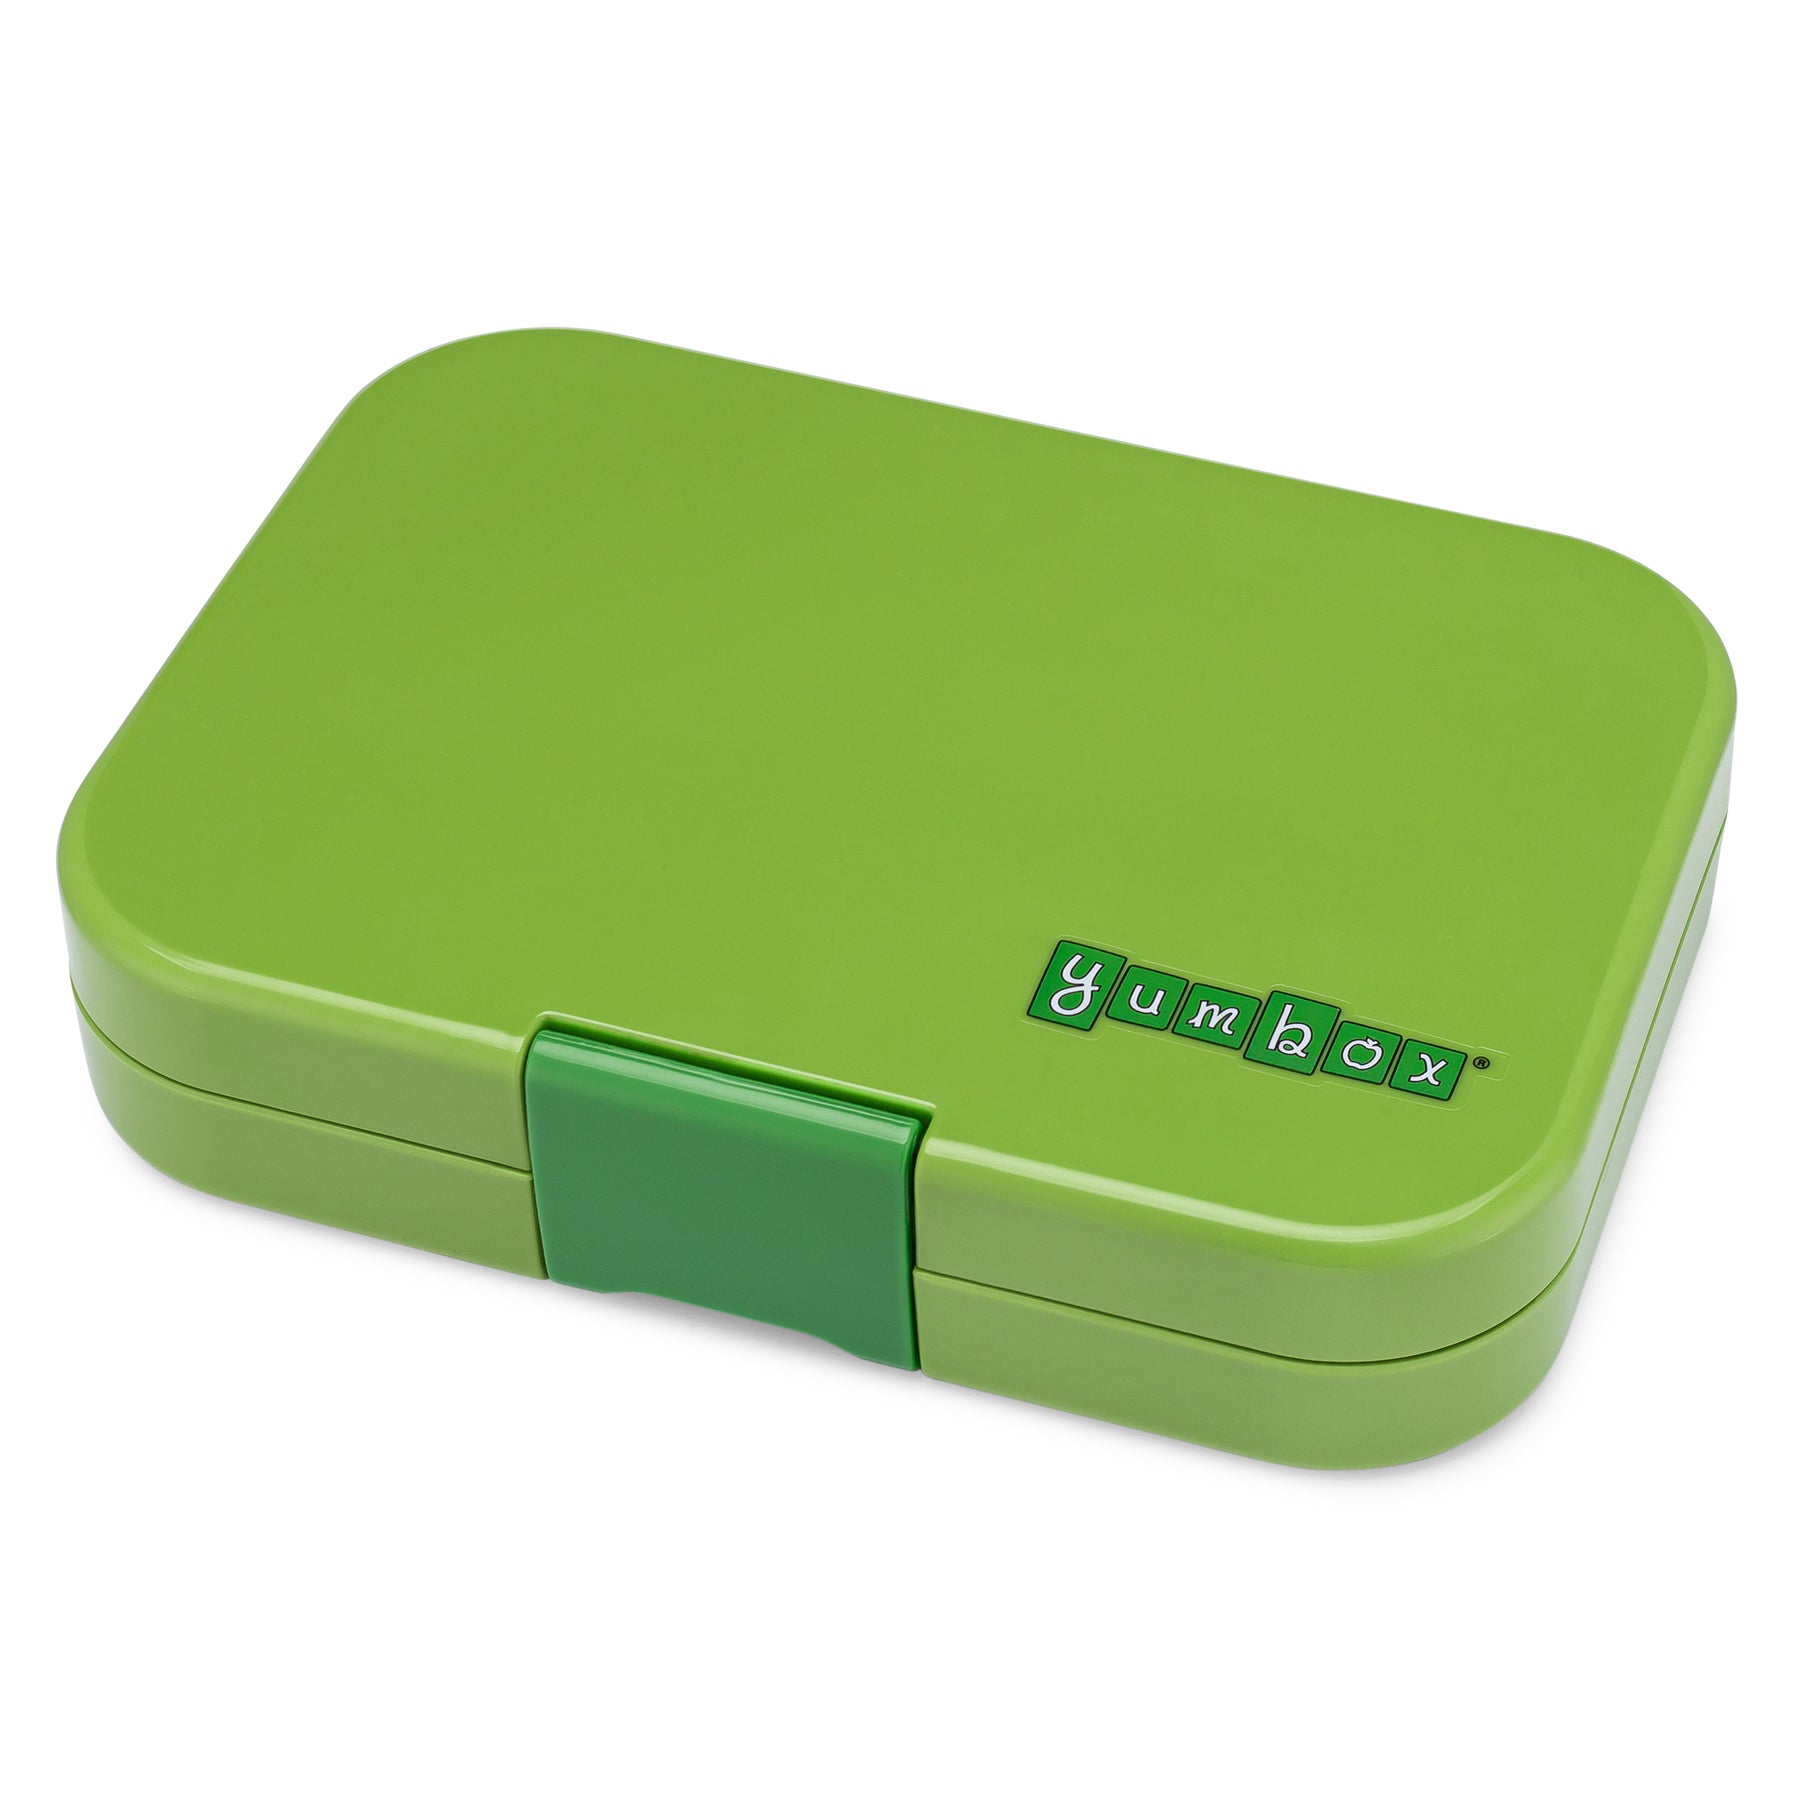 Yumbox Tapas 4 Compartment- Greenwich Green - NYC Tray – Lunchbox Mini